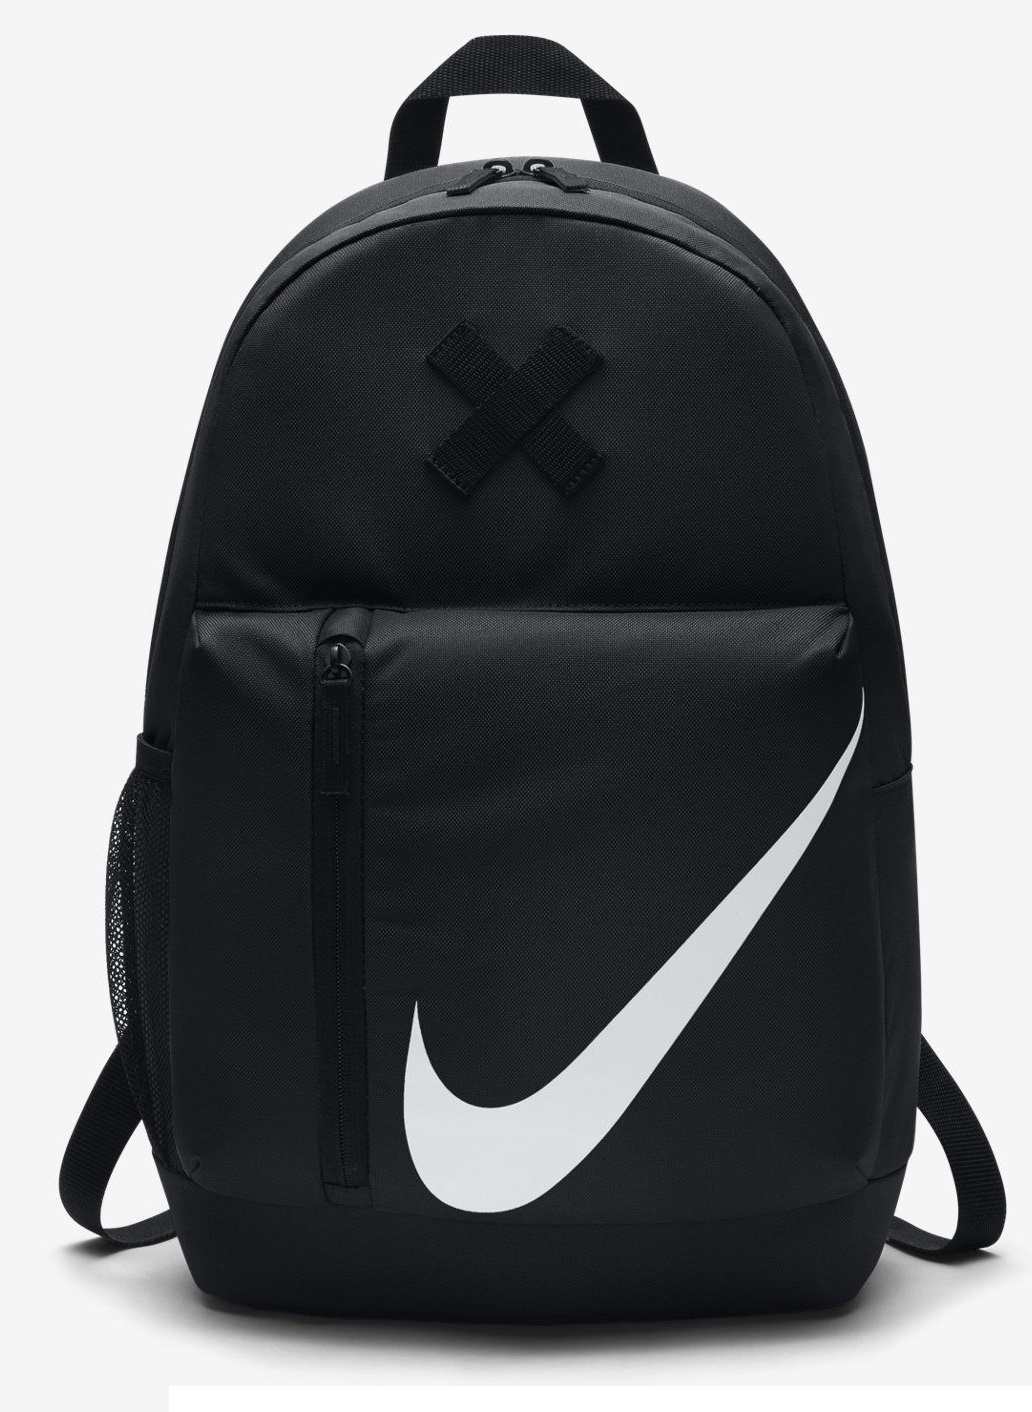 Buy Nike Unisex Black Laptop Backpack Online - Get 79% Off